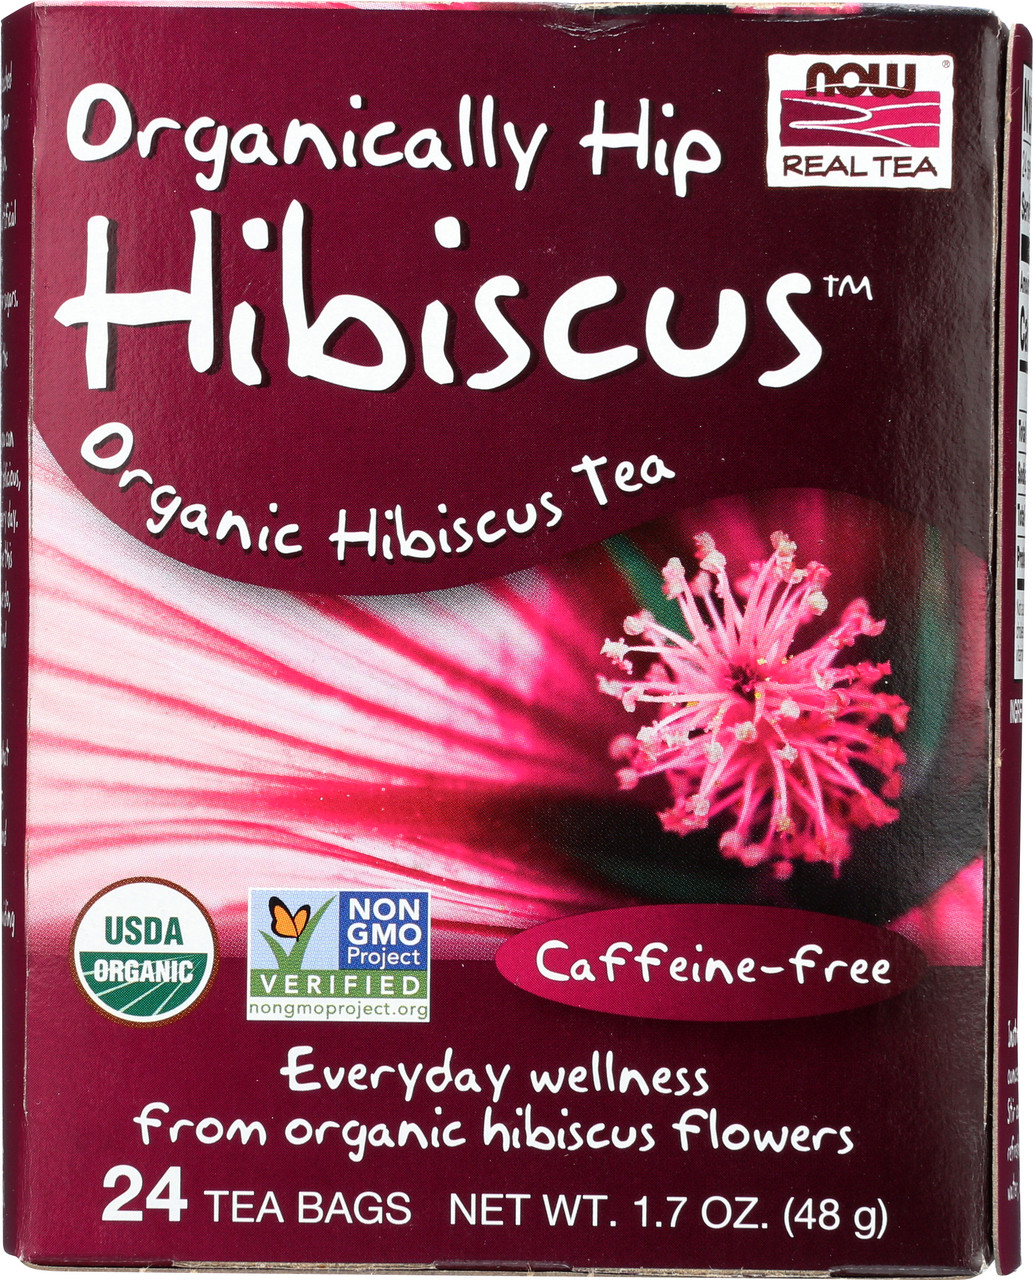 Organically Hip Hibiscus Tea - 24 Tea Bags